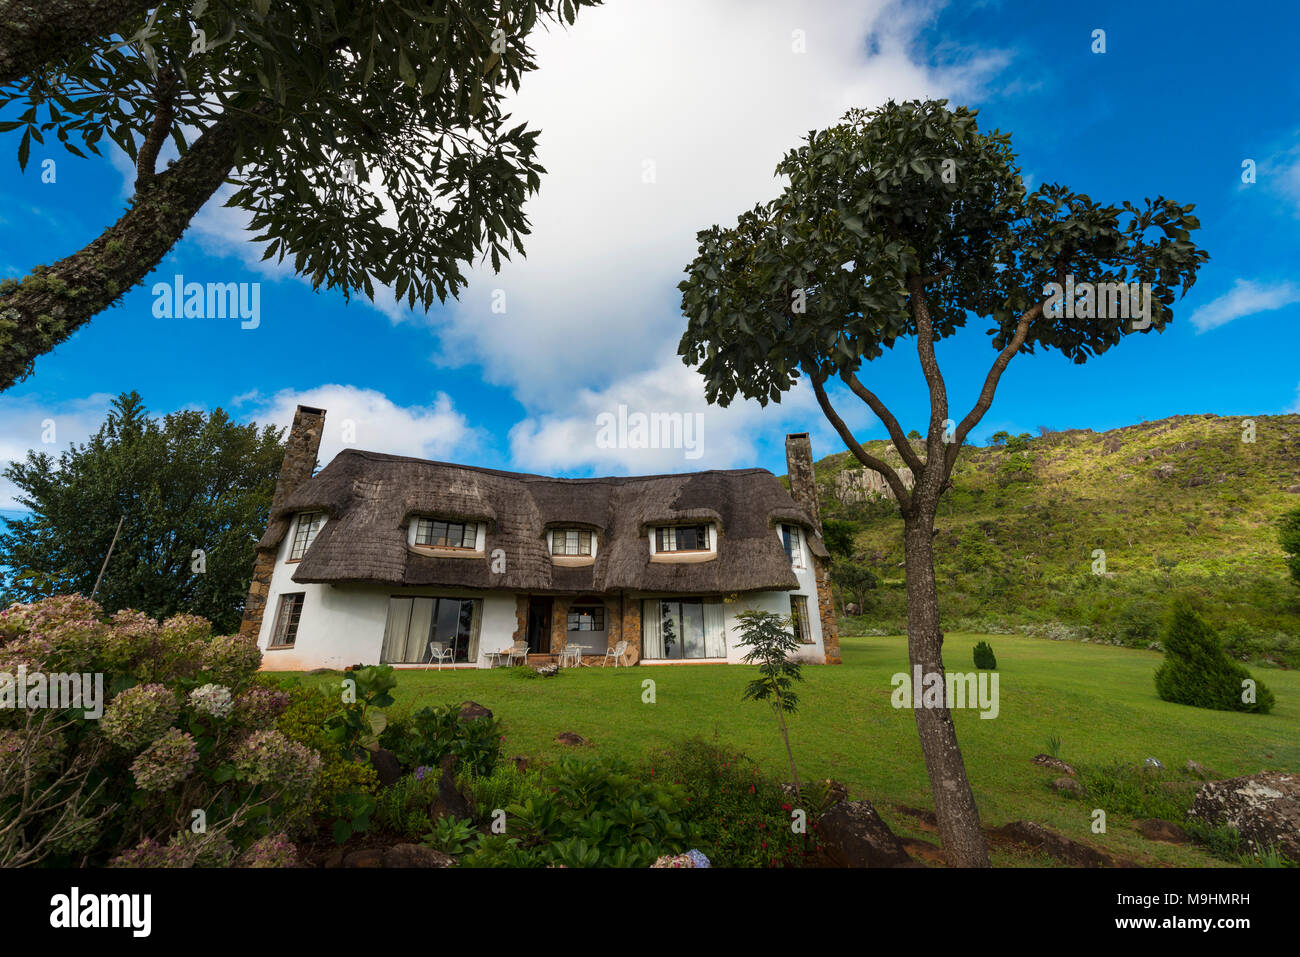 A holiday home seen in Zimbabwe's Nyanga. Stock Photo